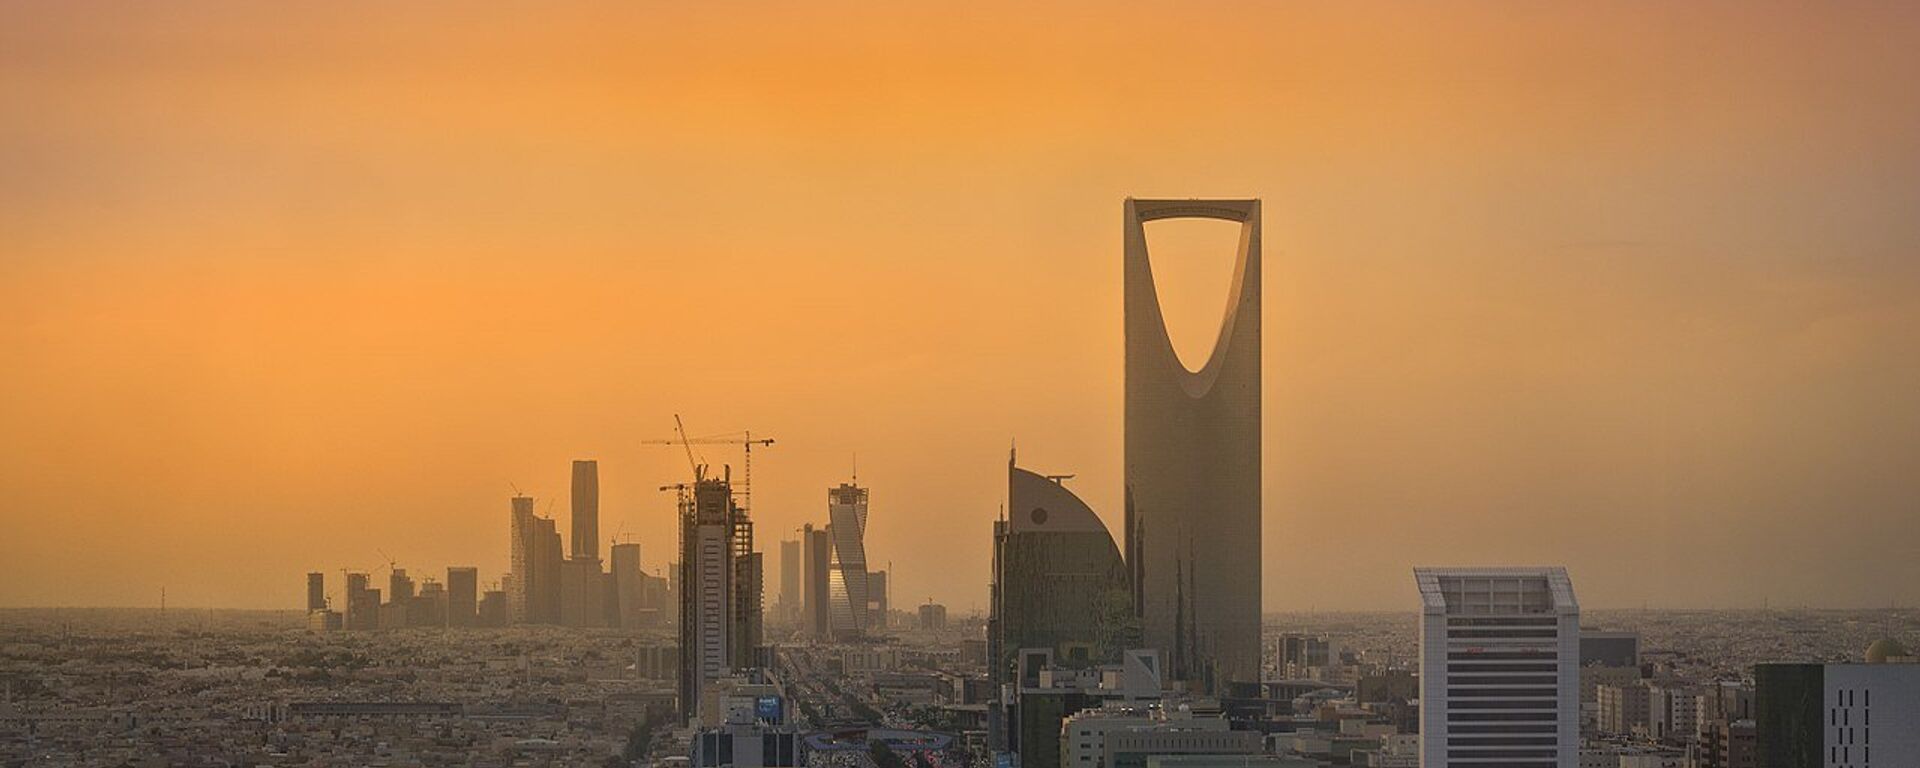 Riyadh Skyline showing the King Abdullah Financial District (KAFD) and the famous Kingdom Tower - Sputnik International, 1920, 21.04.2020